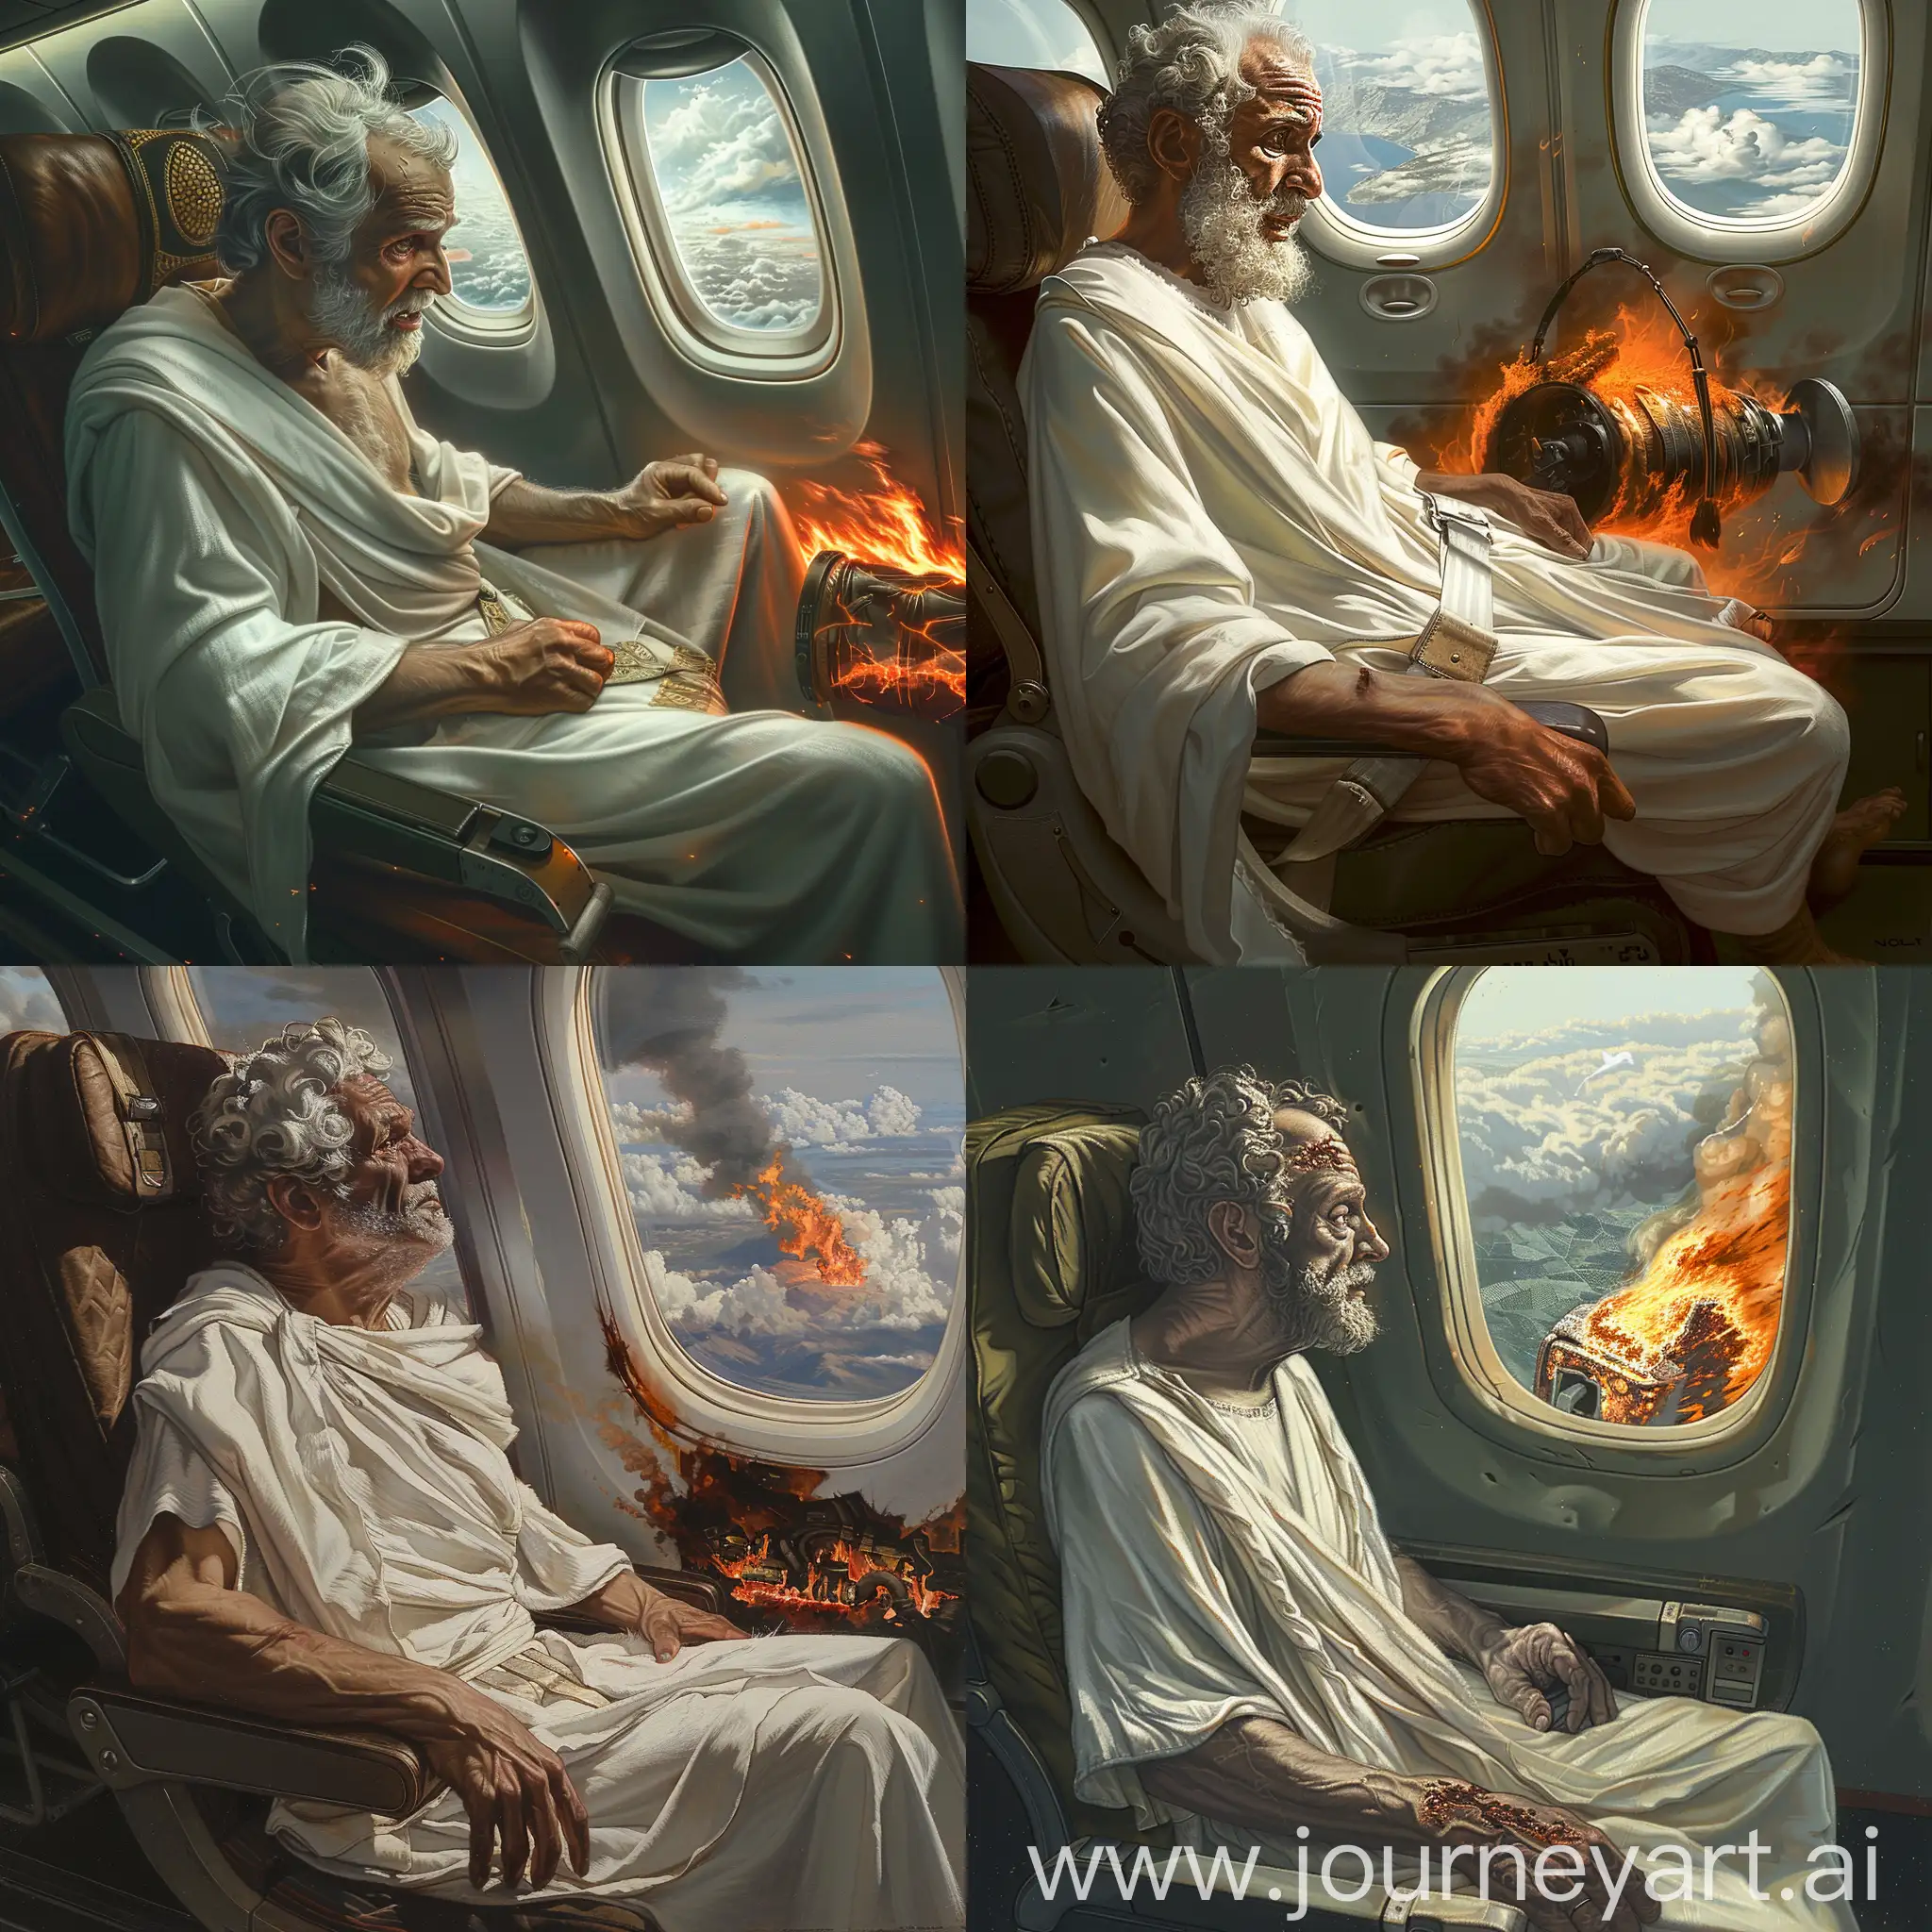 Sad-Greek-Philosopher-Flying-on-Airplane-with-Burning-Engine